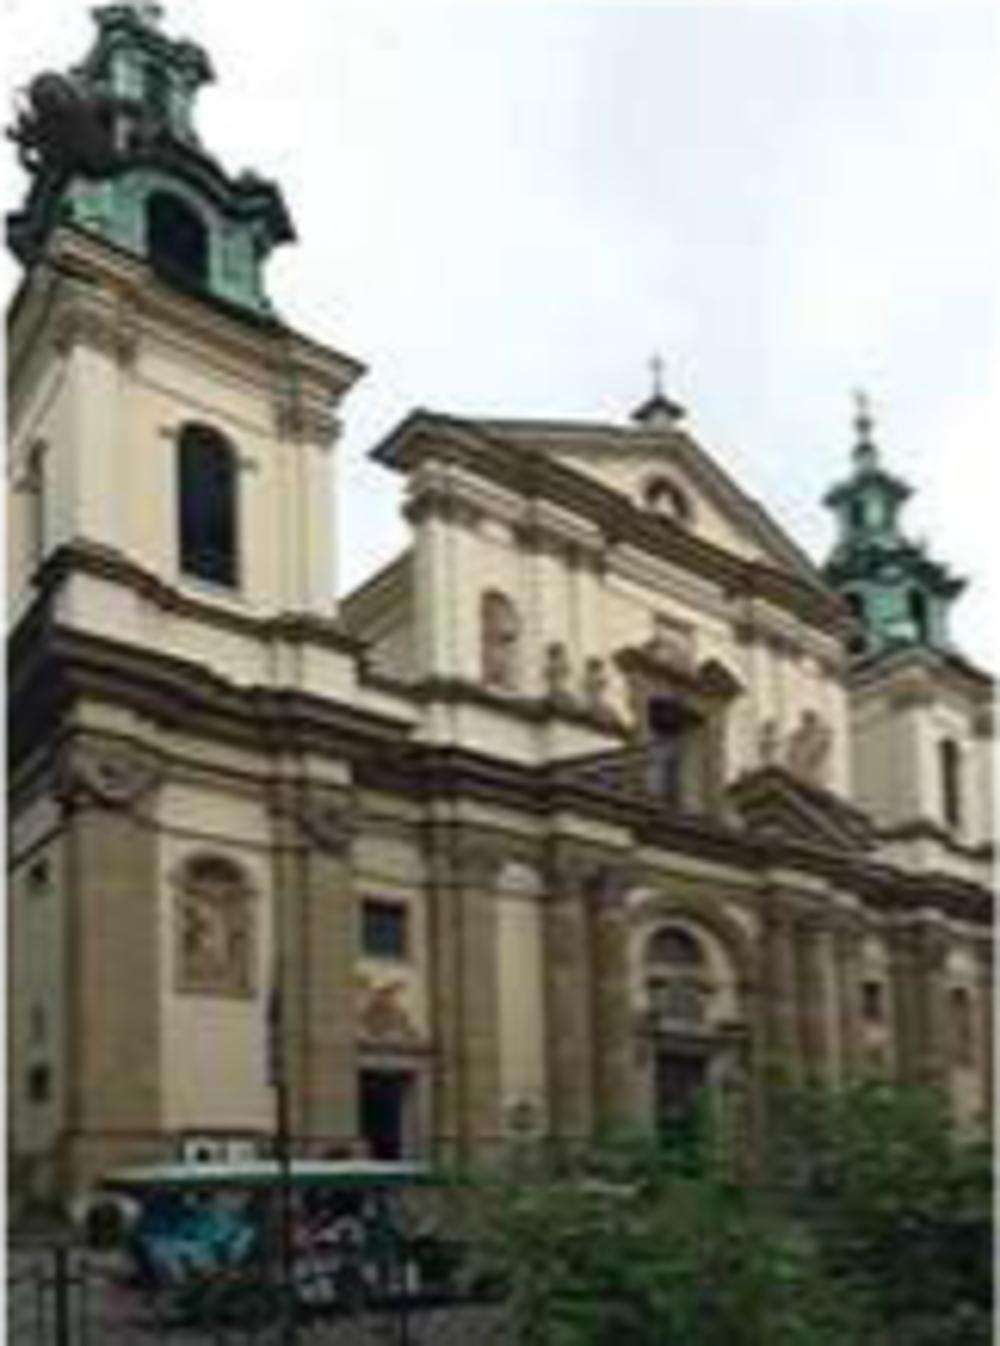 De St.-Annakerk van de universiteit in Krakau. (Foto Lex Veldhoen)